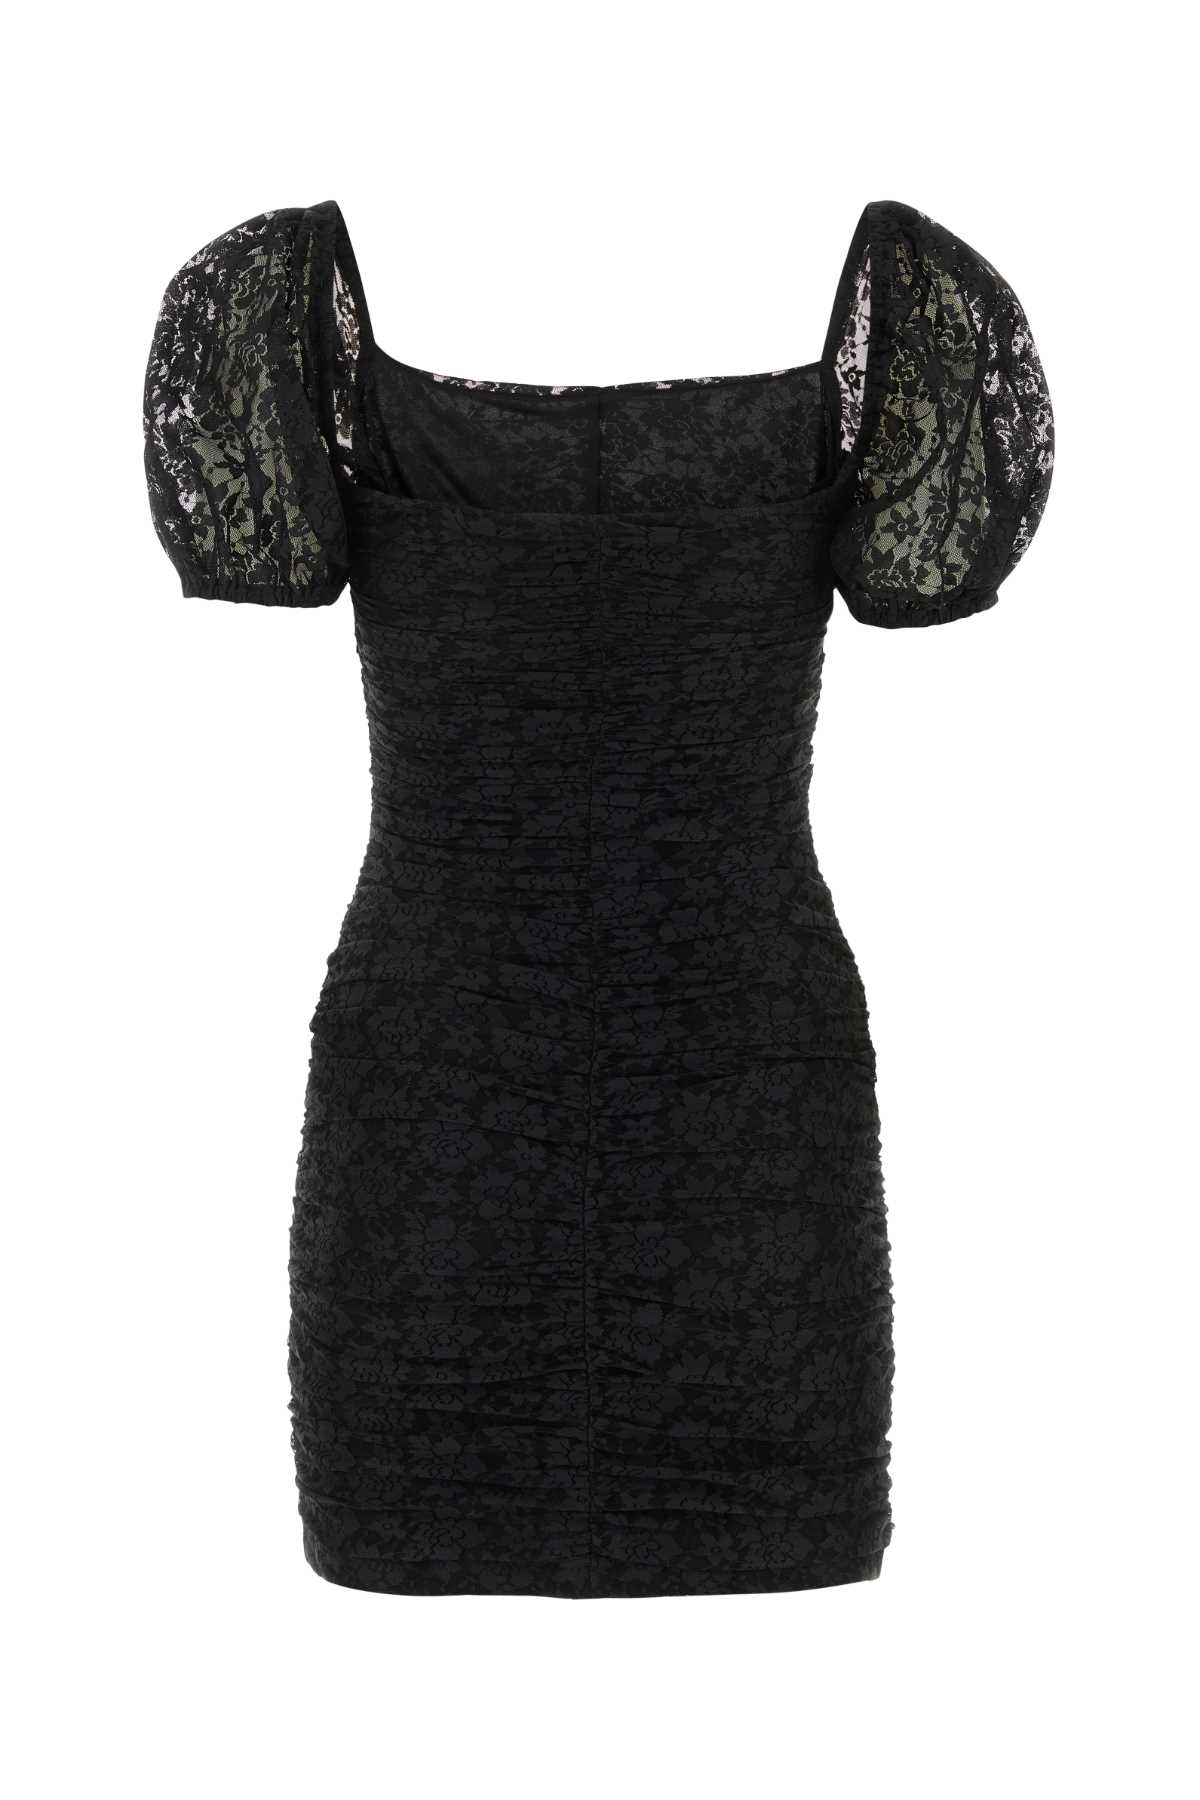 Shop Rotate Birger Christensen Black Lace Mini Dress